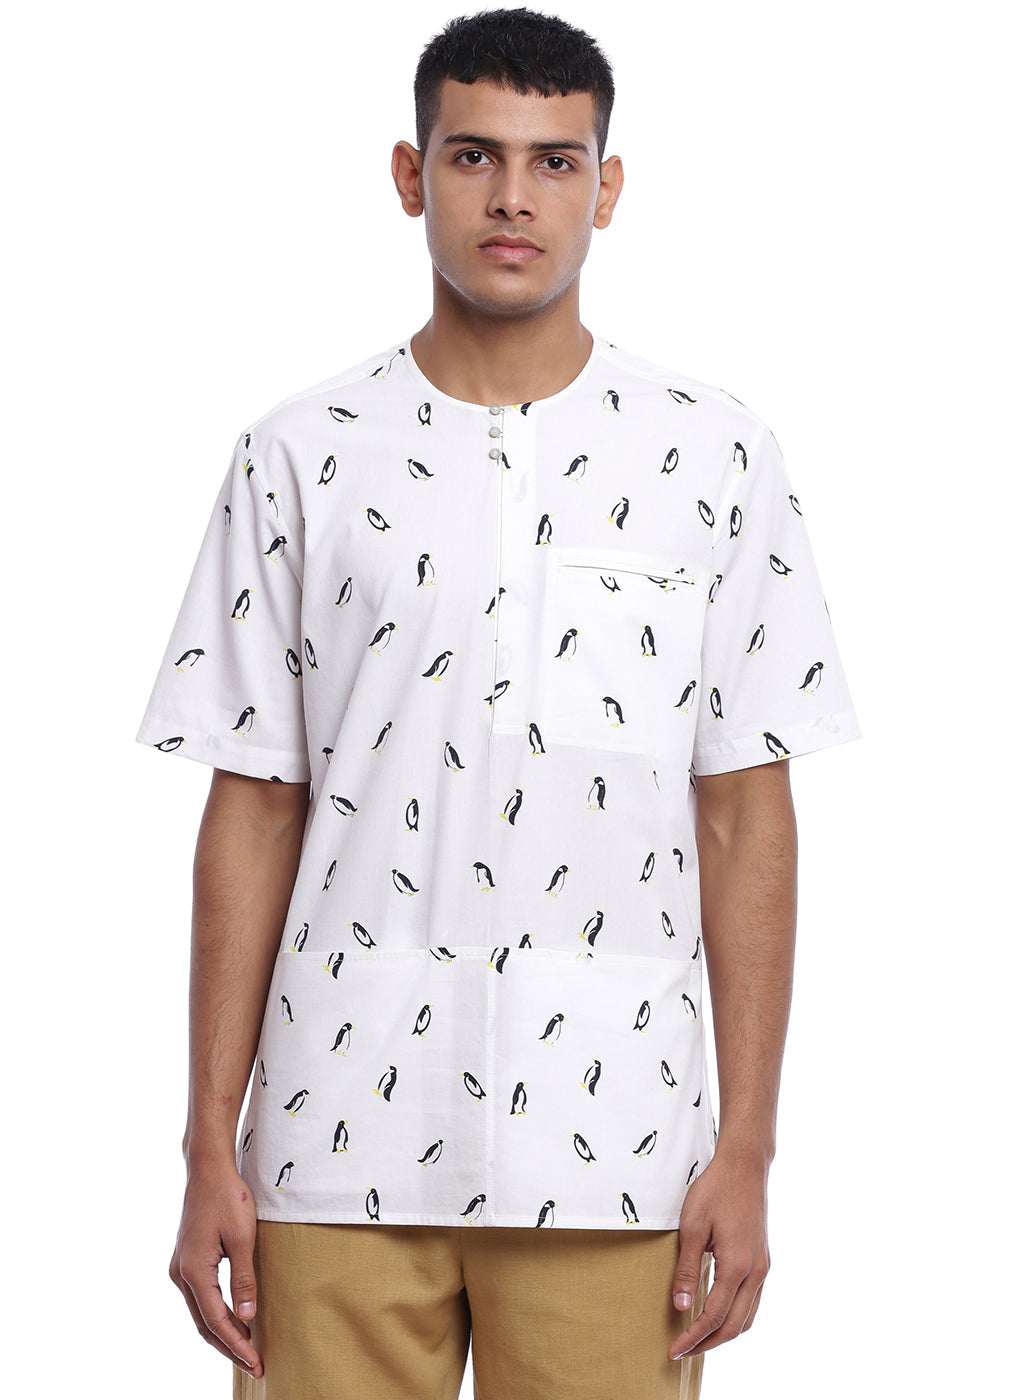 Penguin Print Shirt - Genes online store 2020